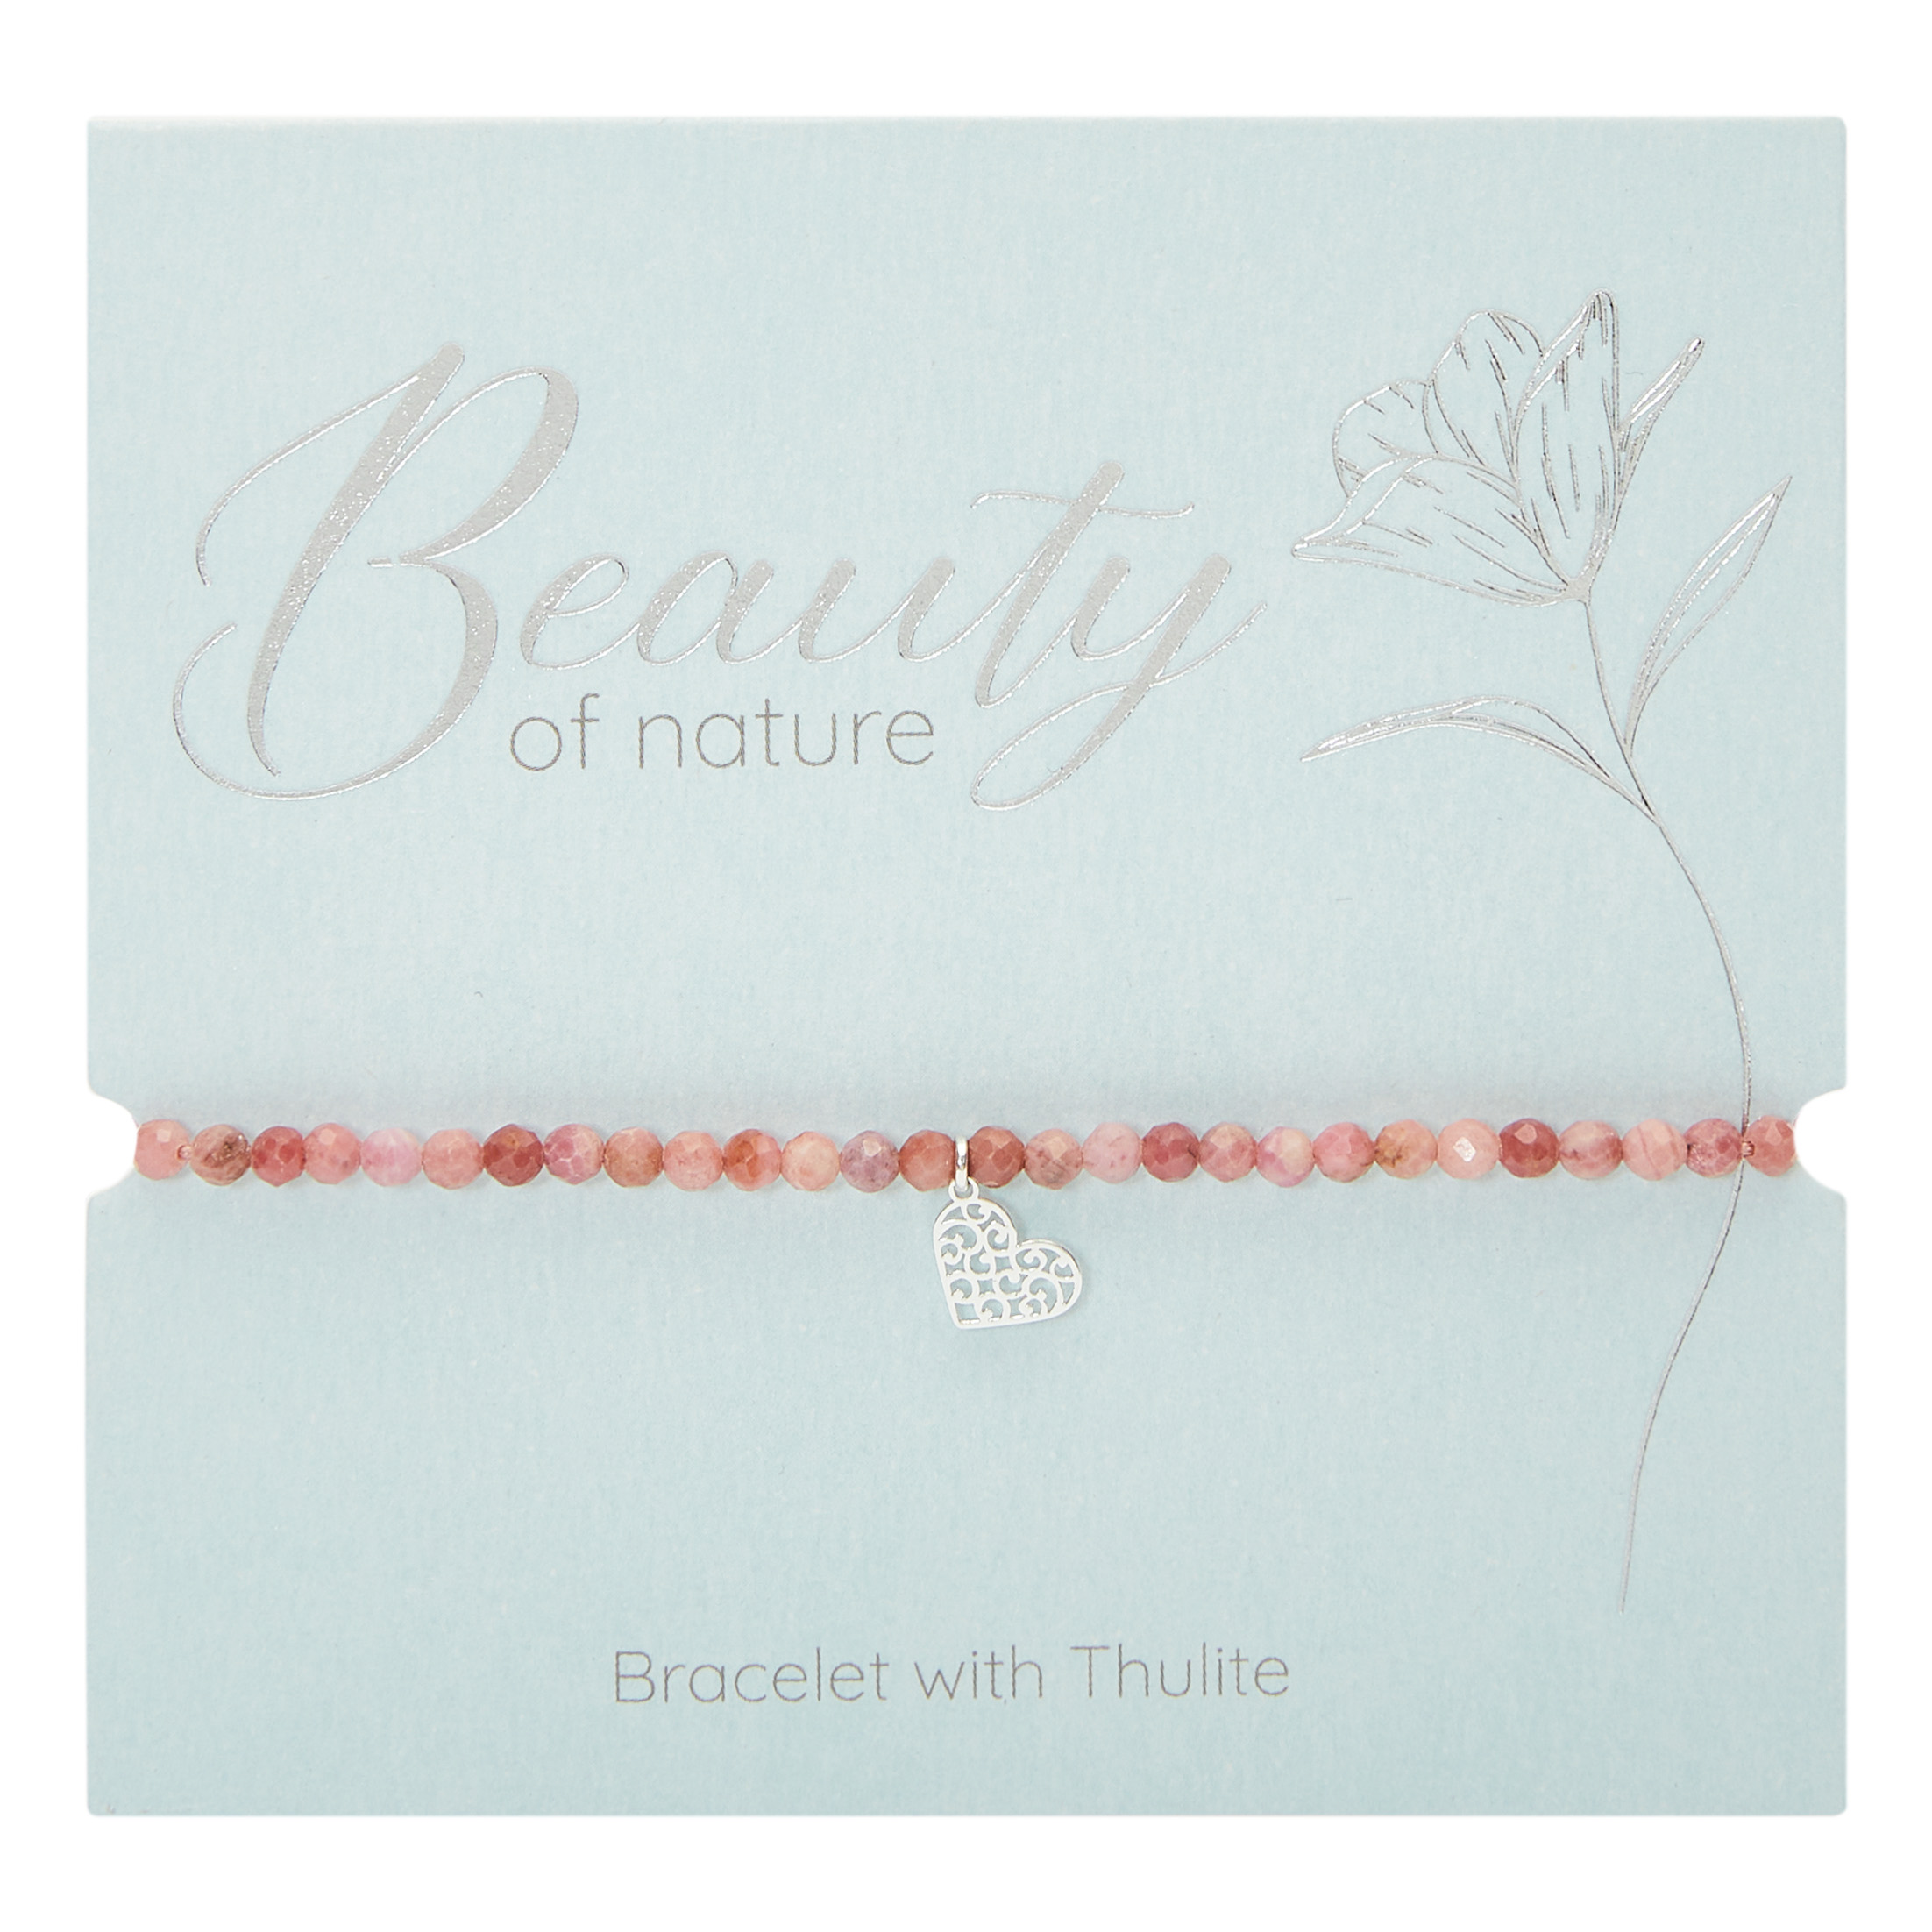 Armband - "Beauty of nature" - versilbert - Thulit - Herz